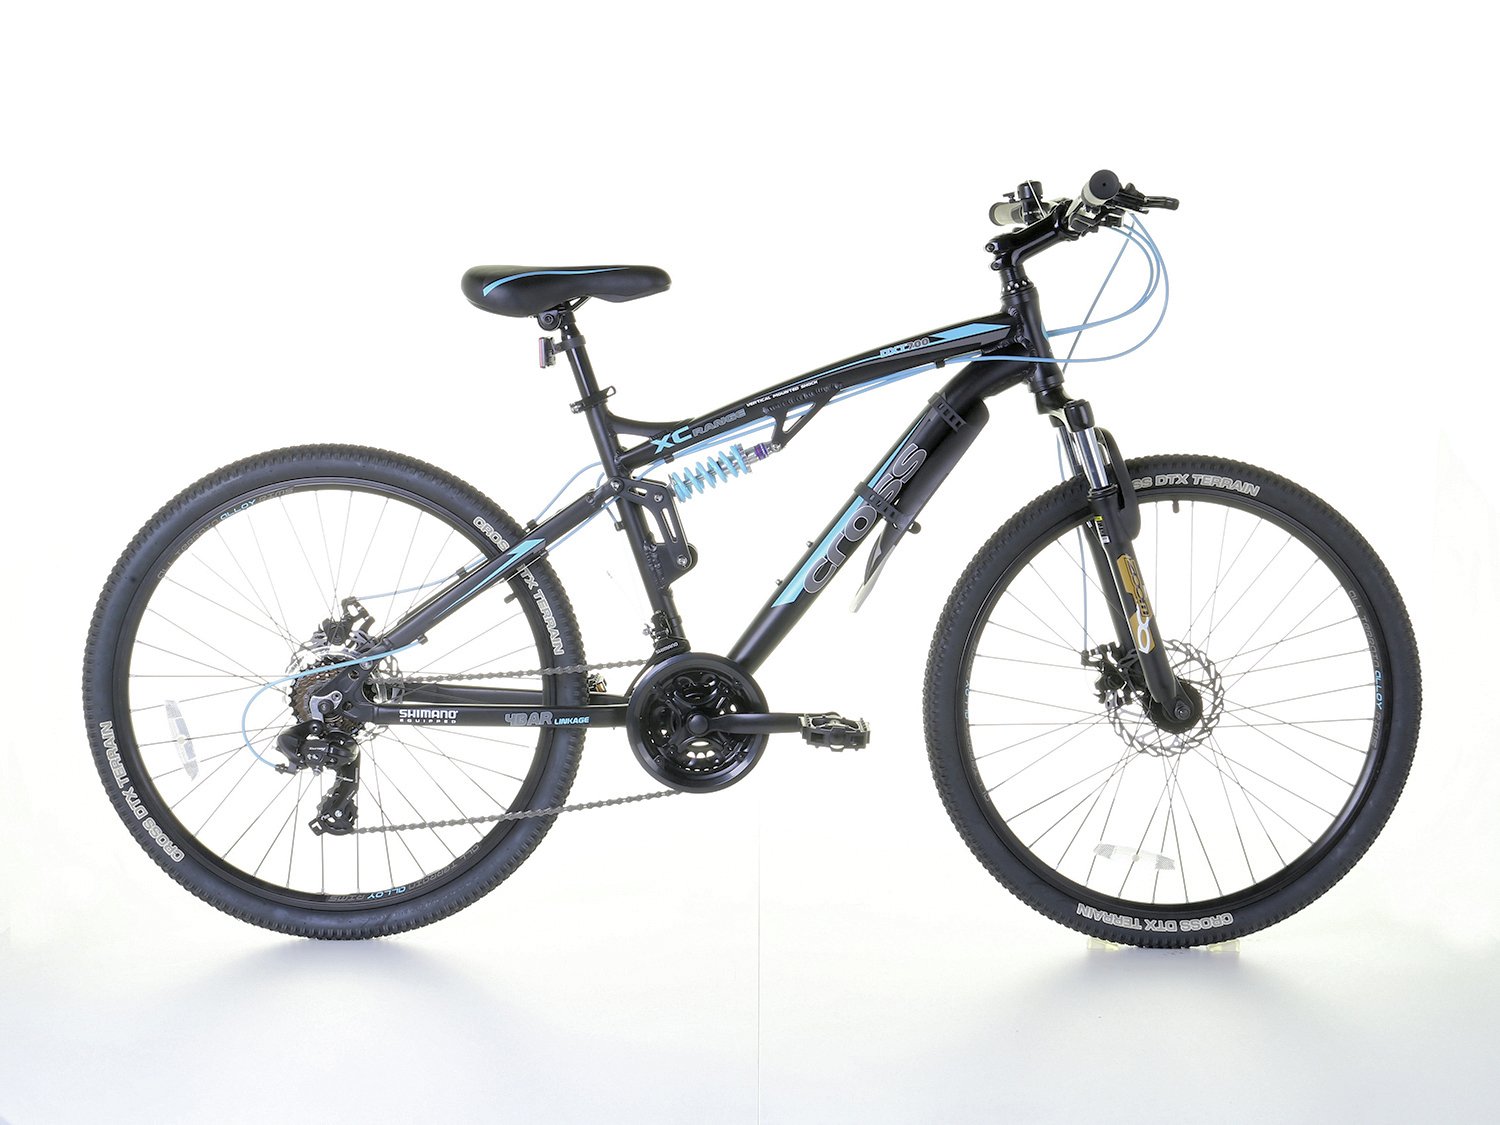 26 inch wheel mountain bike size